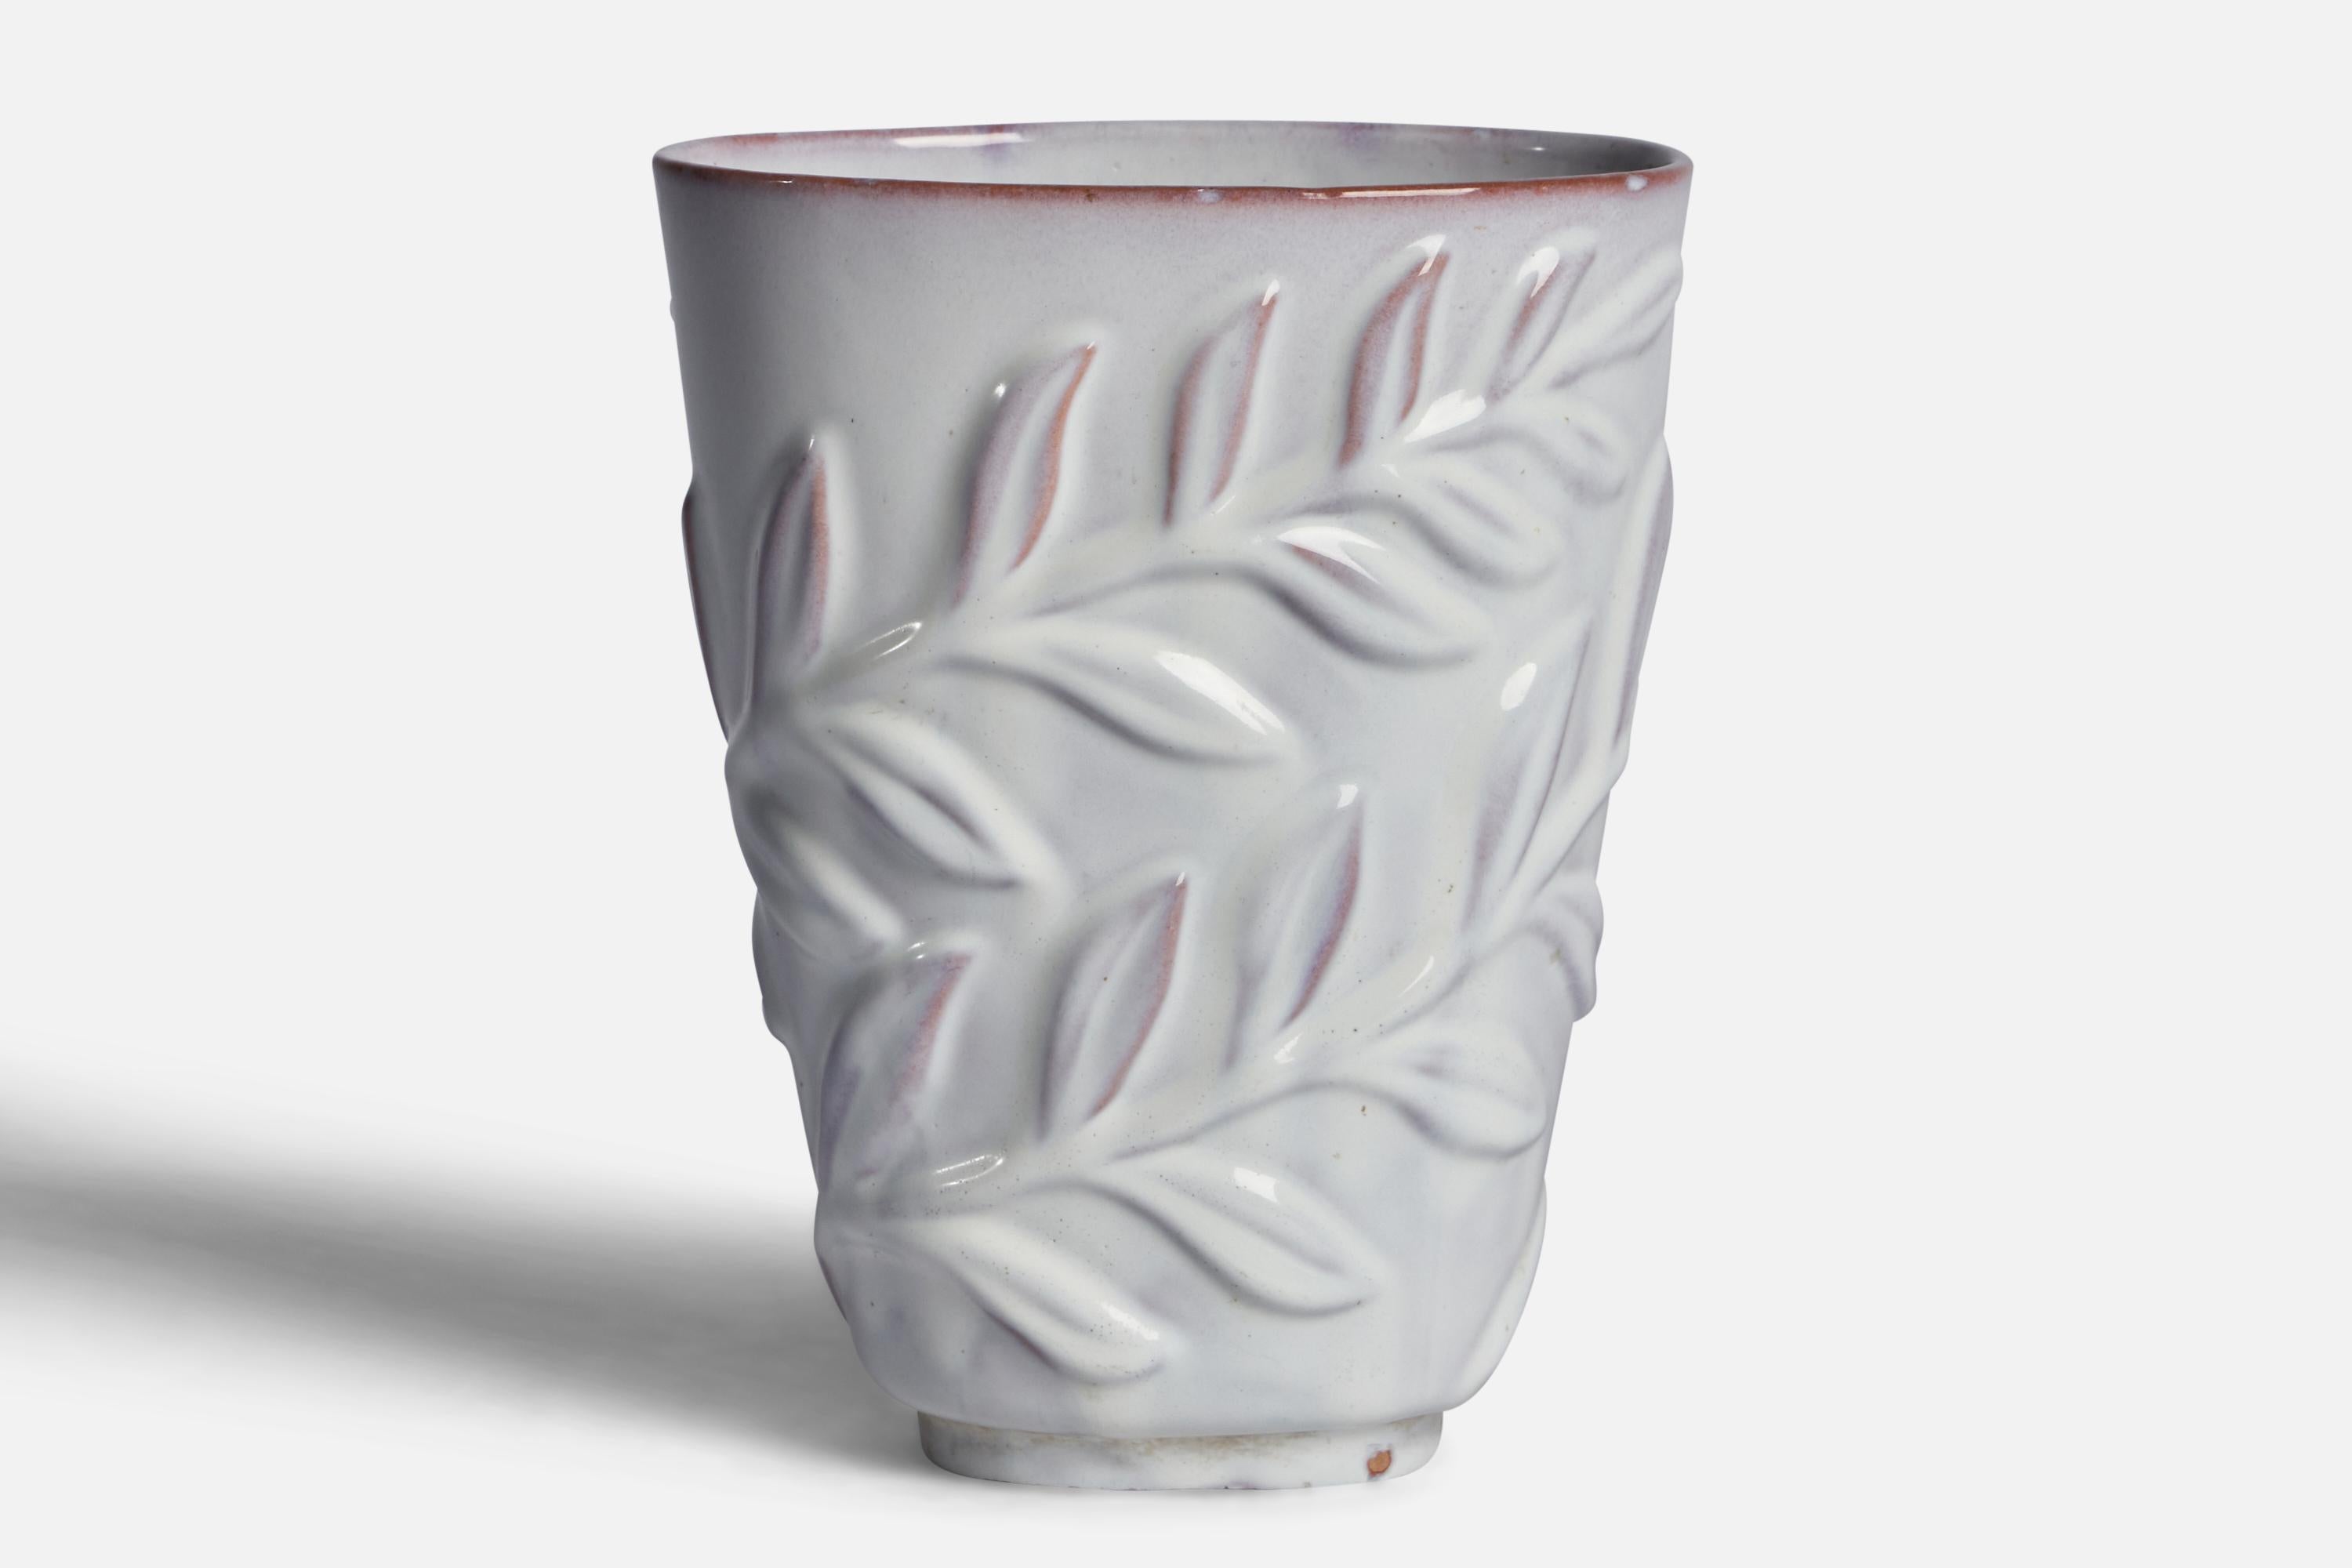 A white-glazed incised earthenware vase designed and produced by Upsala Ekeby, Sweden, 1930s.